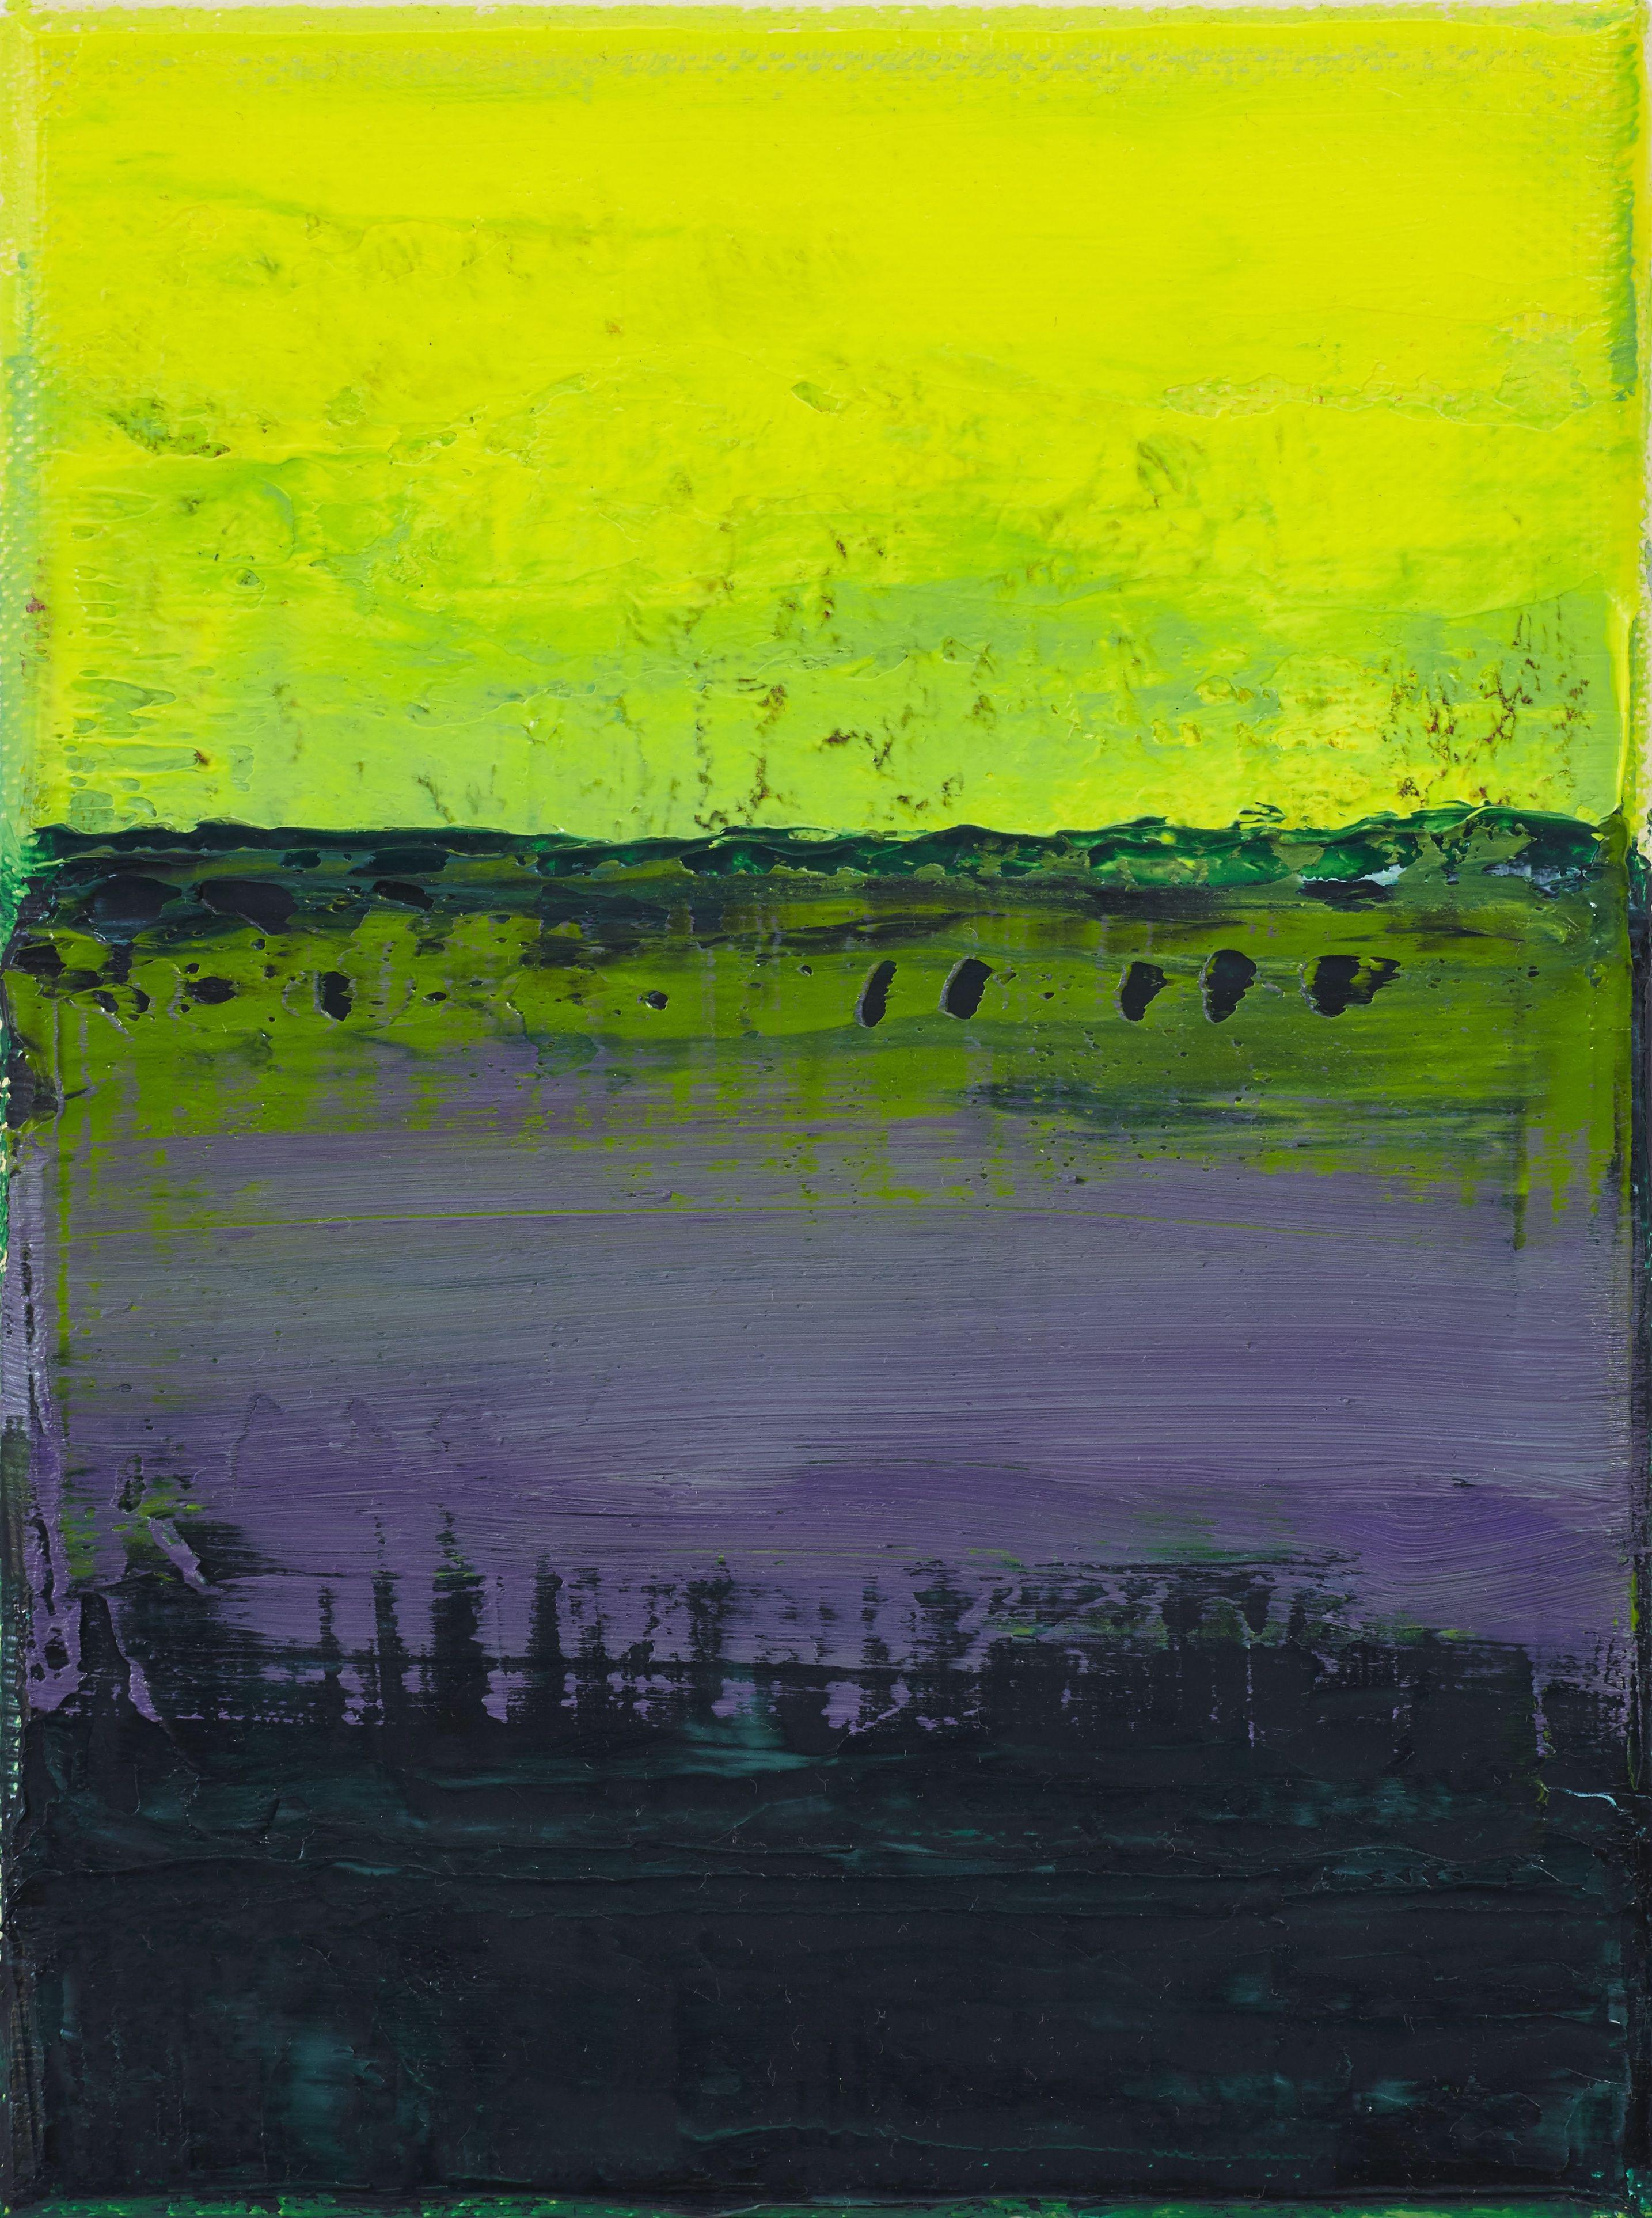 Yellow Purple Green Horizon, Painting, Oil on Canvas